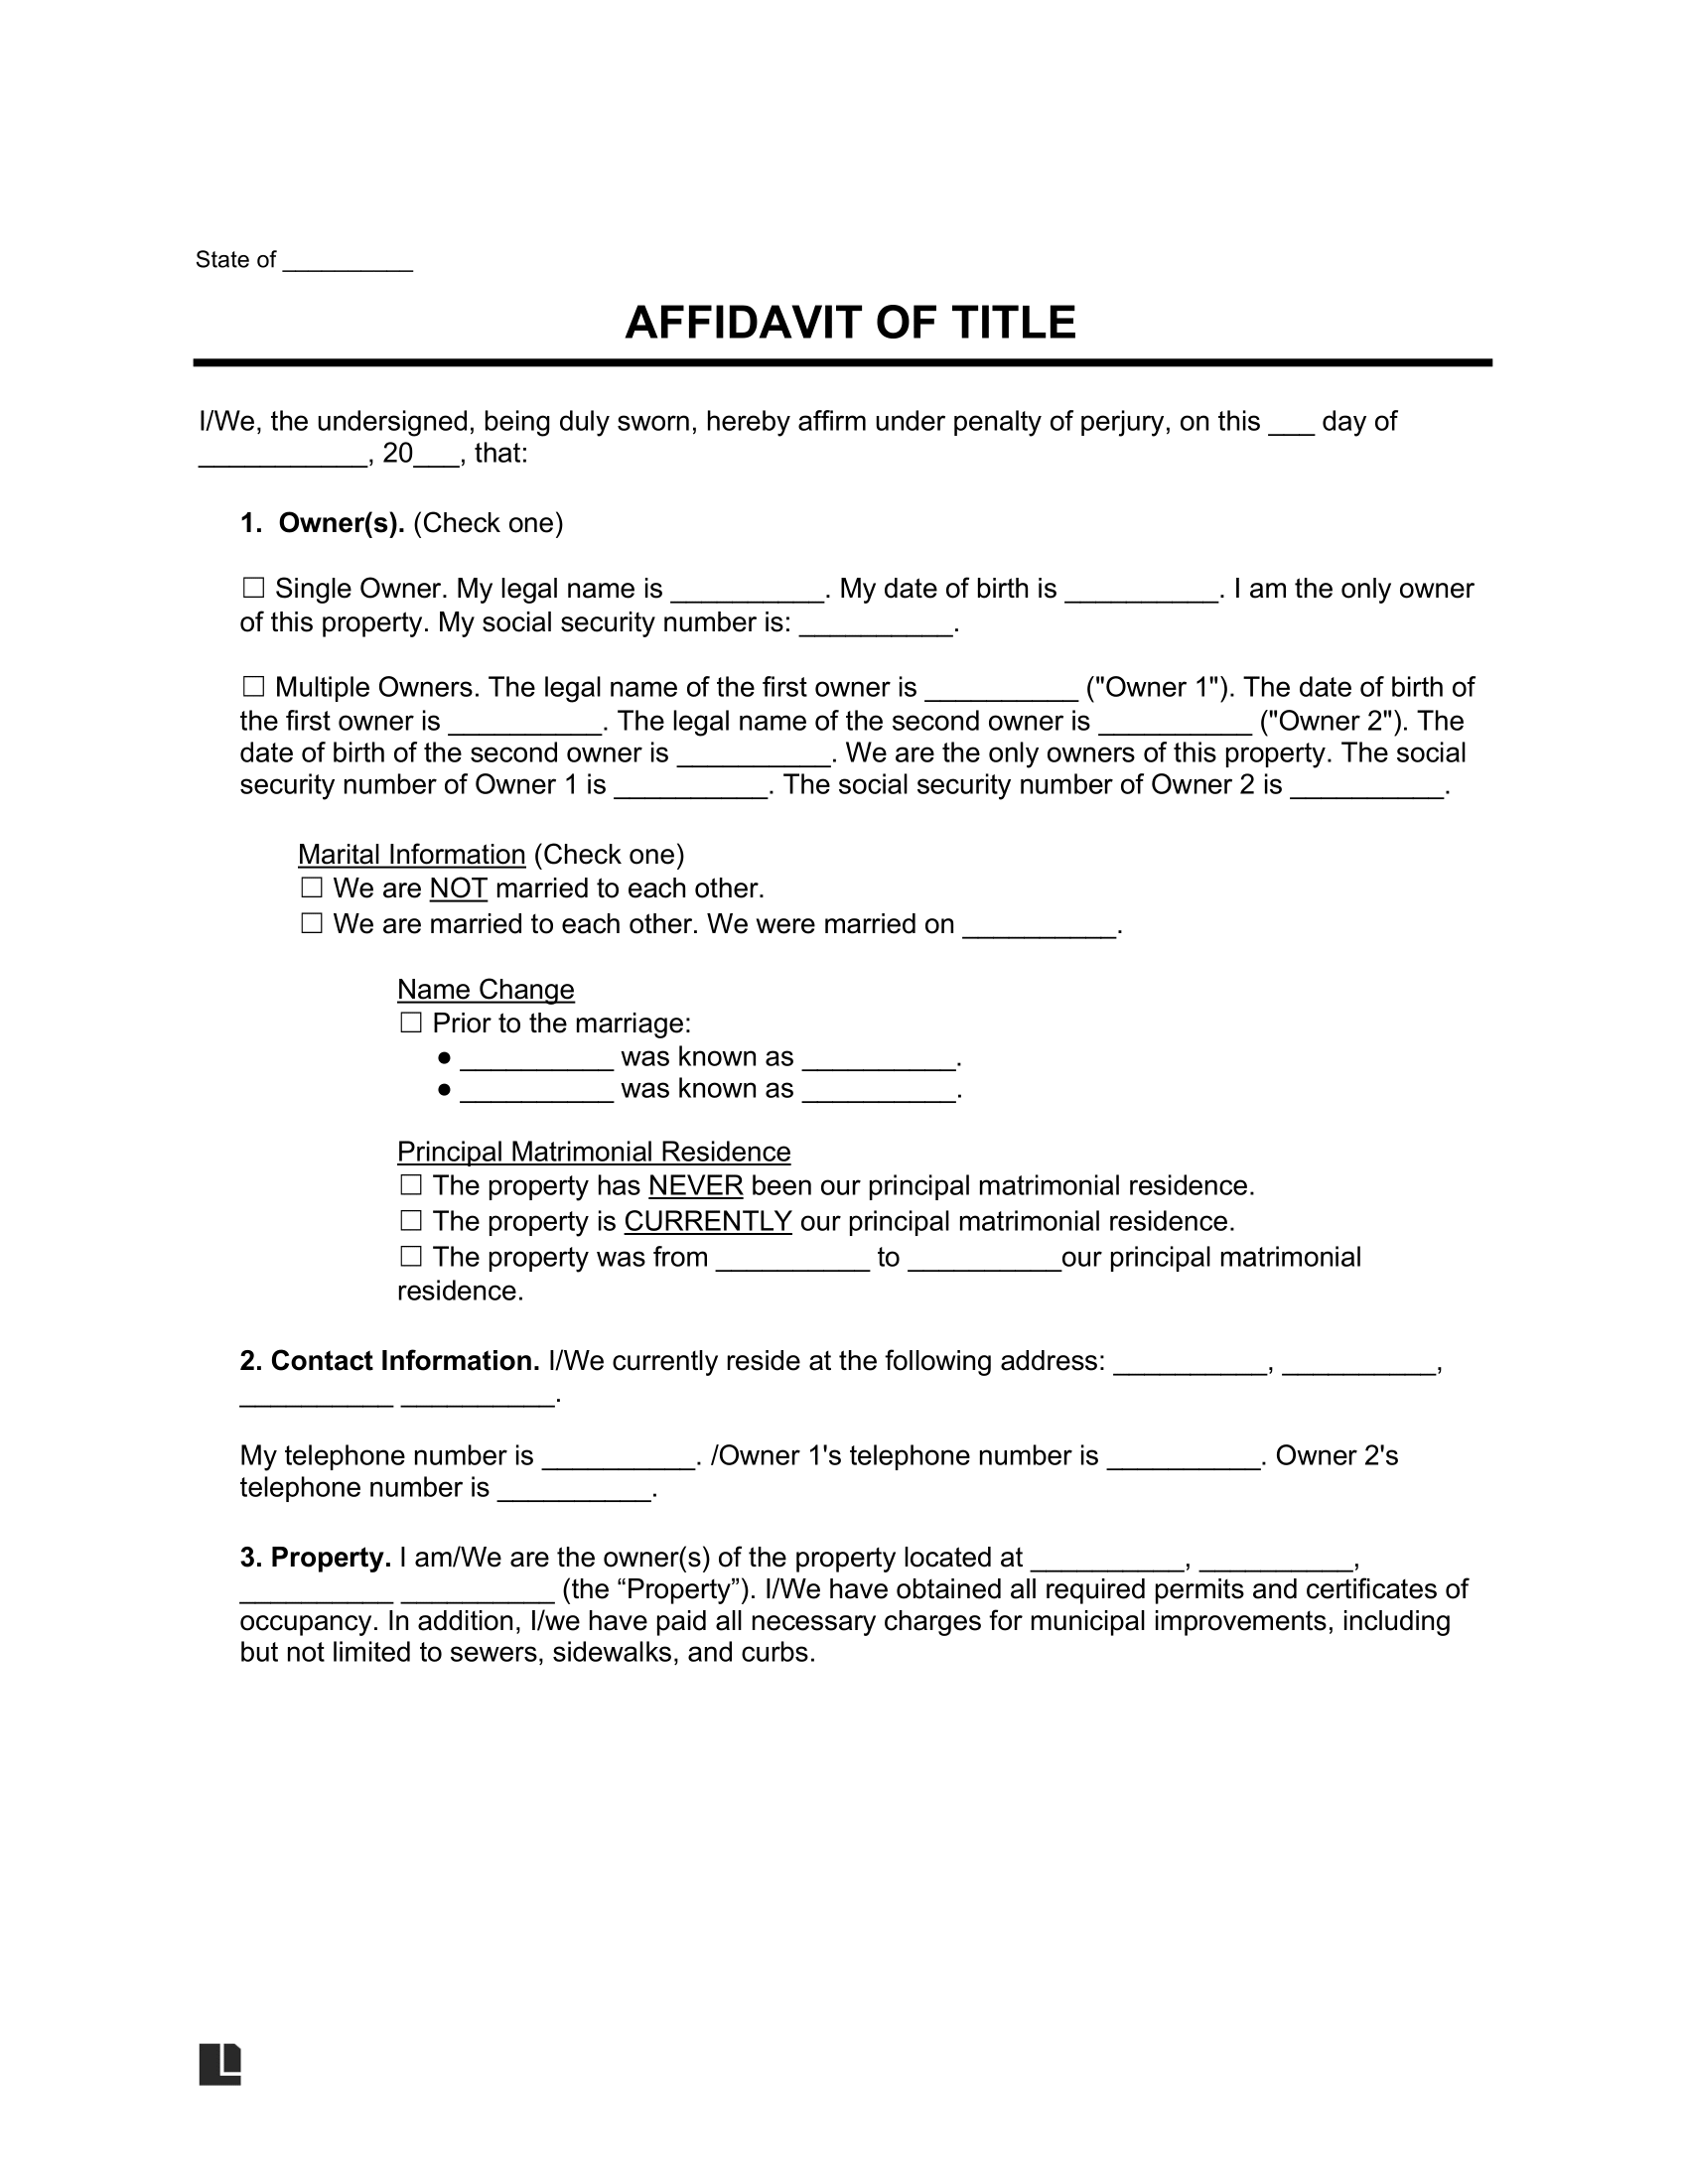 affidavit of title template